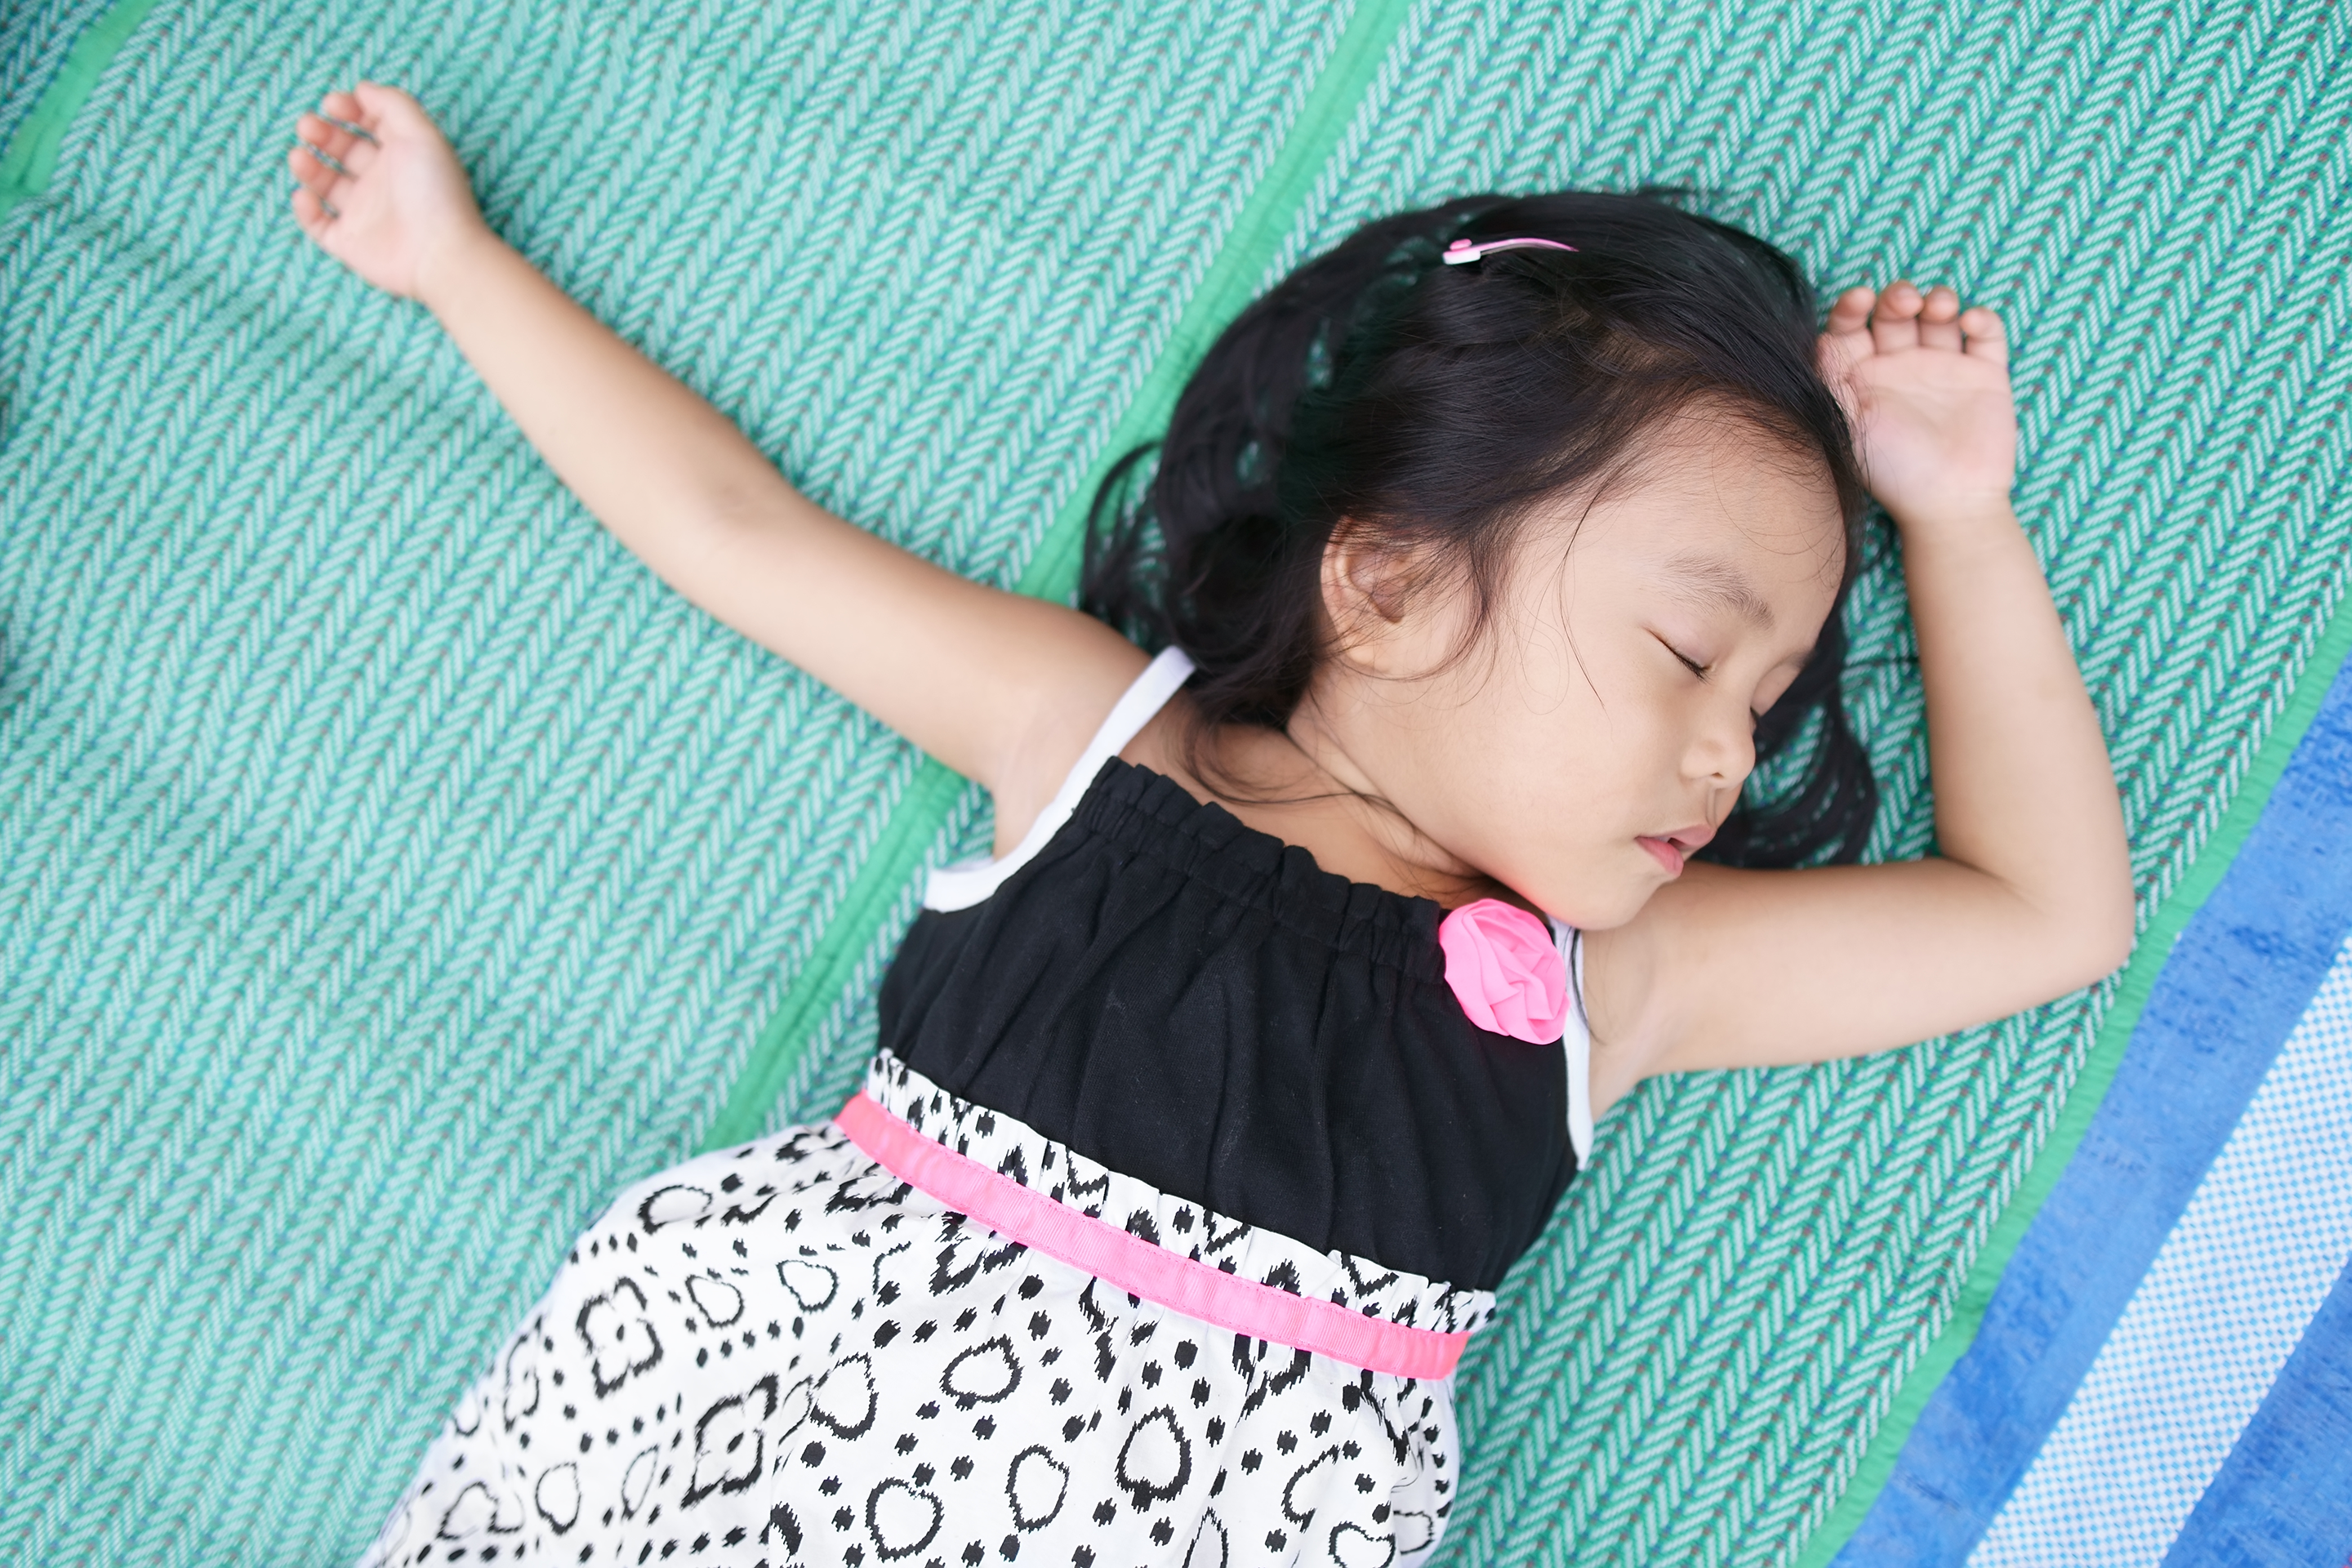 Naptime may bolster early literacy skills among preschoolers